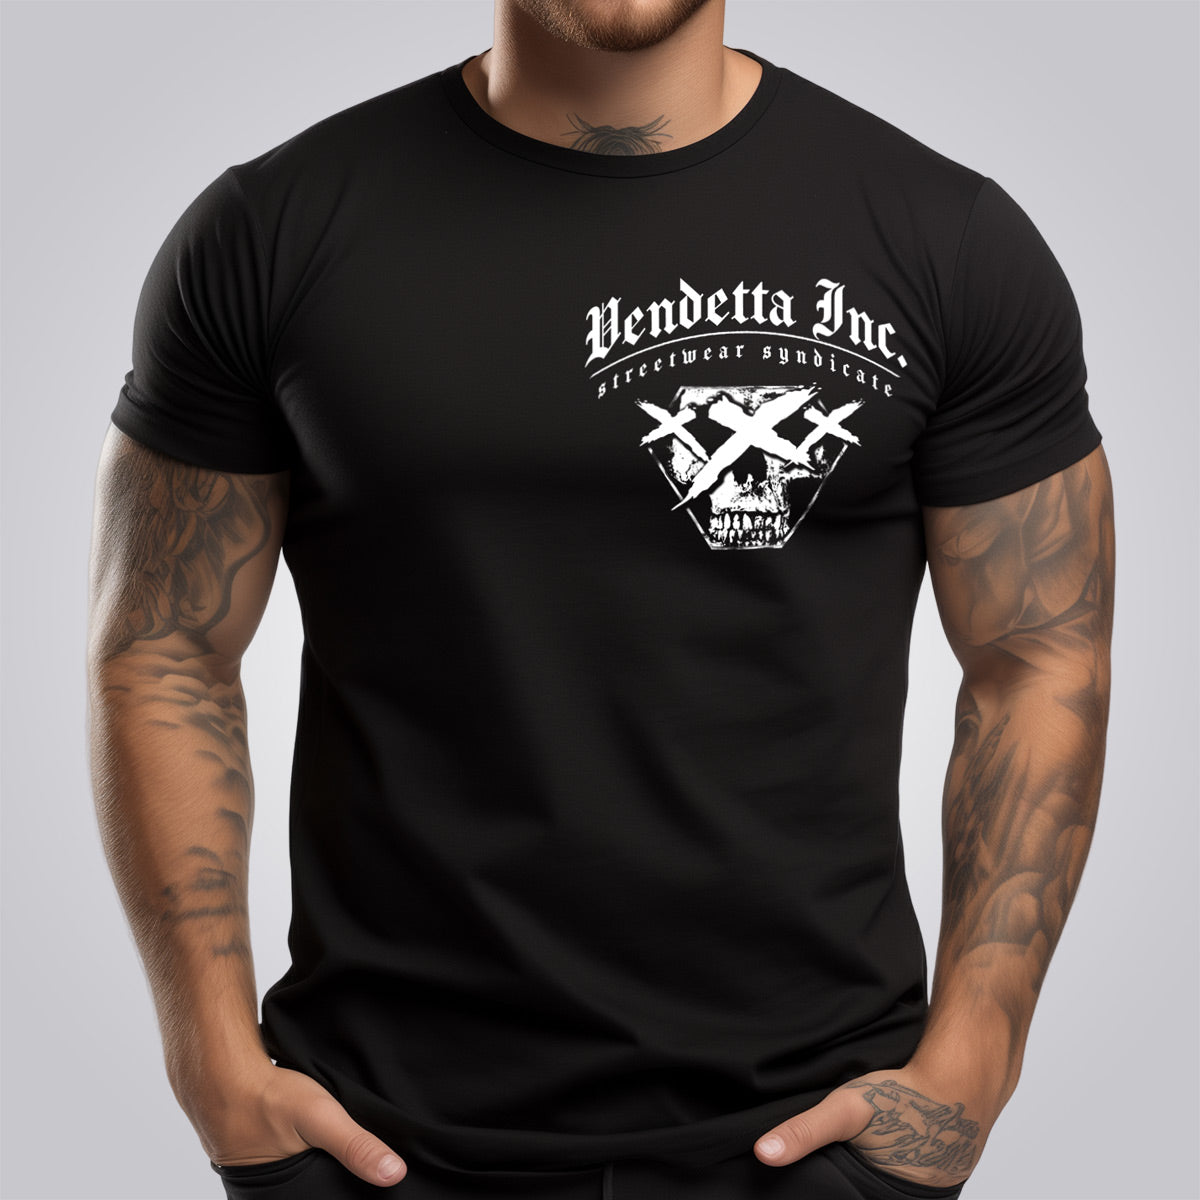 Vendetta Inc. Shirt schwarz Syndicate